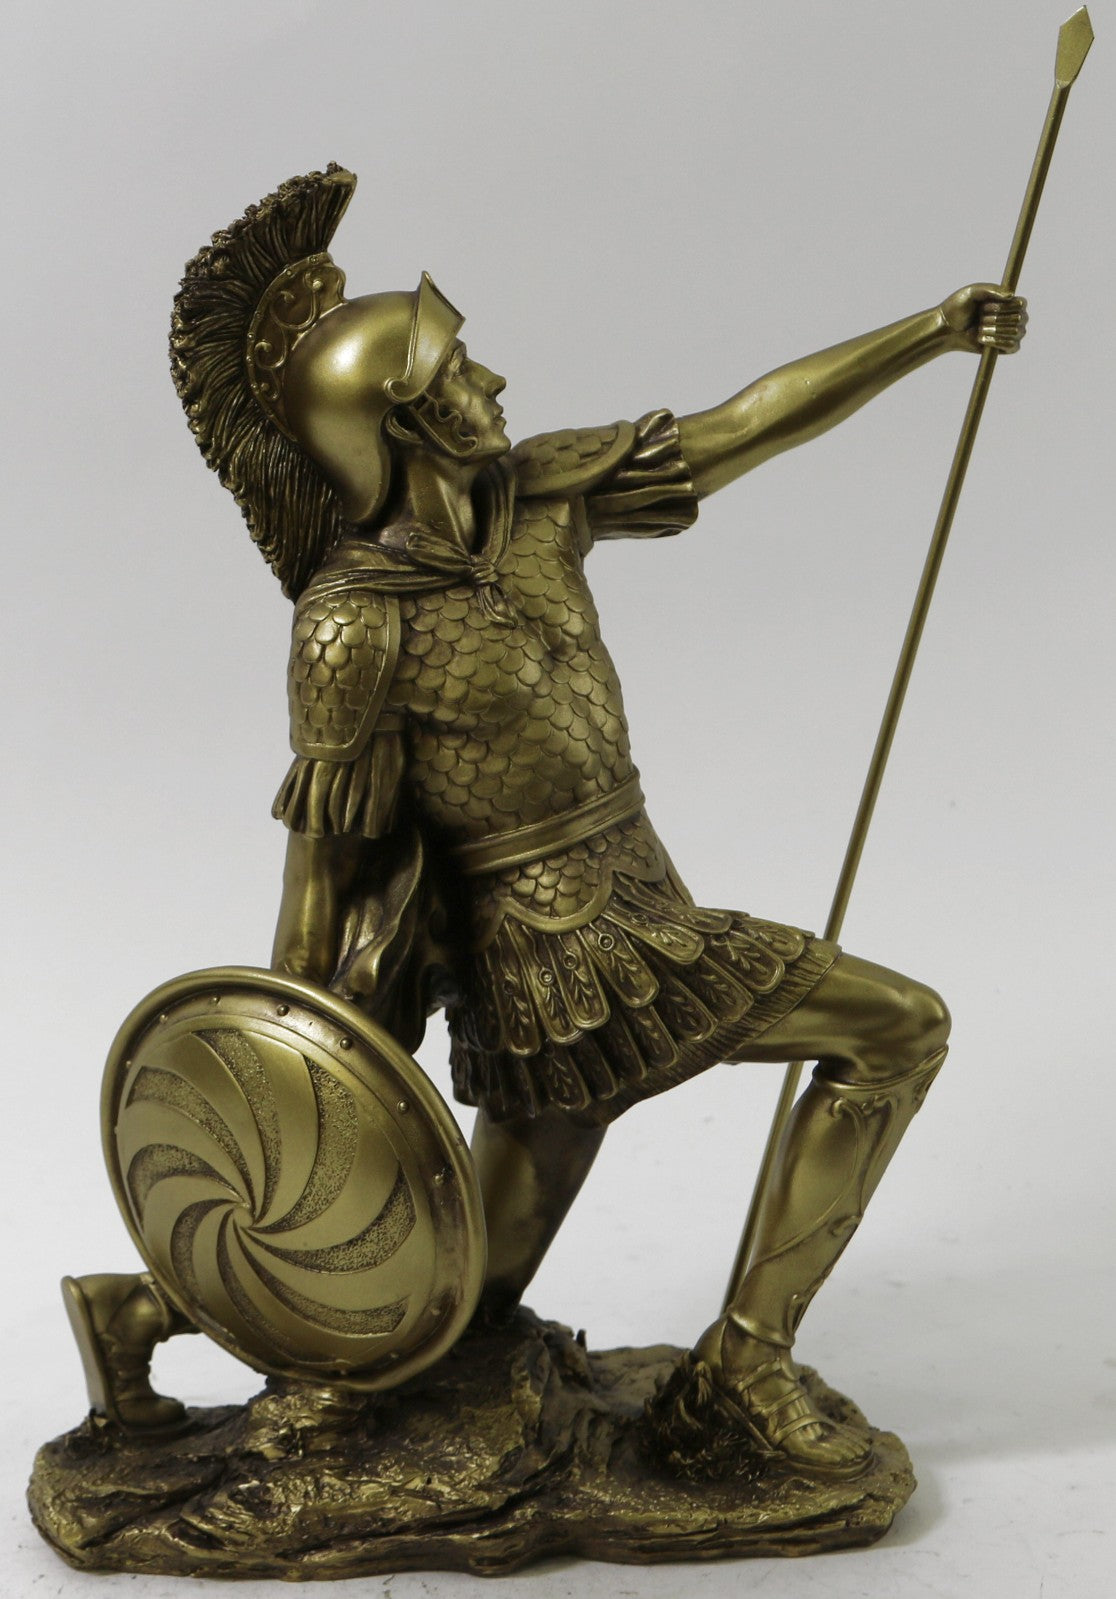 Hand Made Large Odysseus Roman Warrior Bronzed Sculpture Statue Figurine Decor